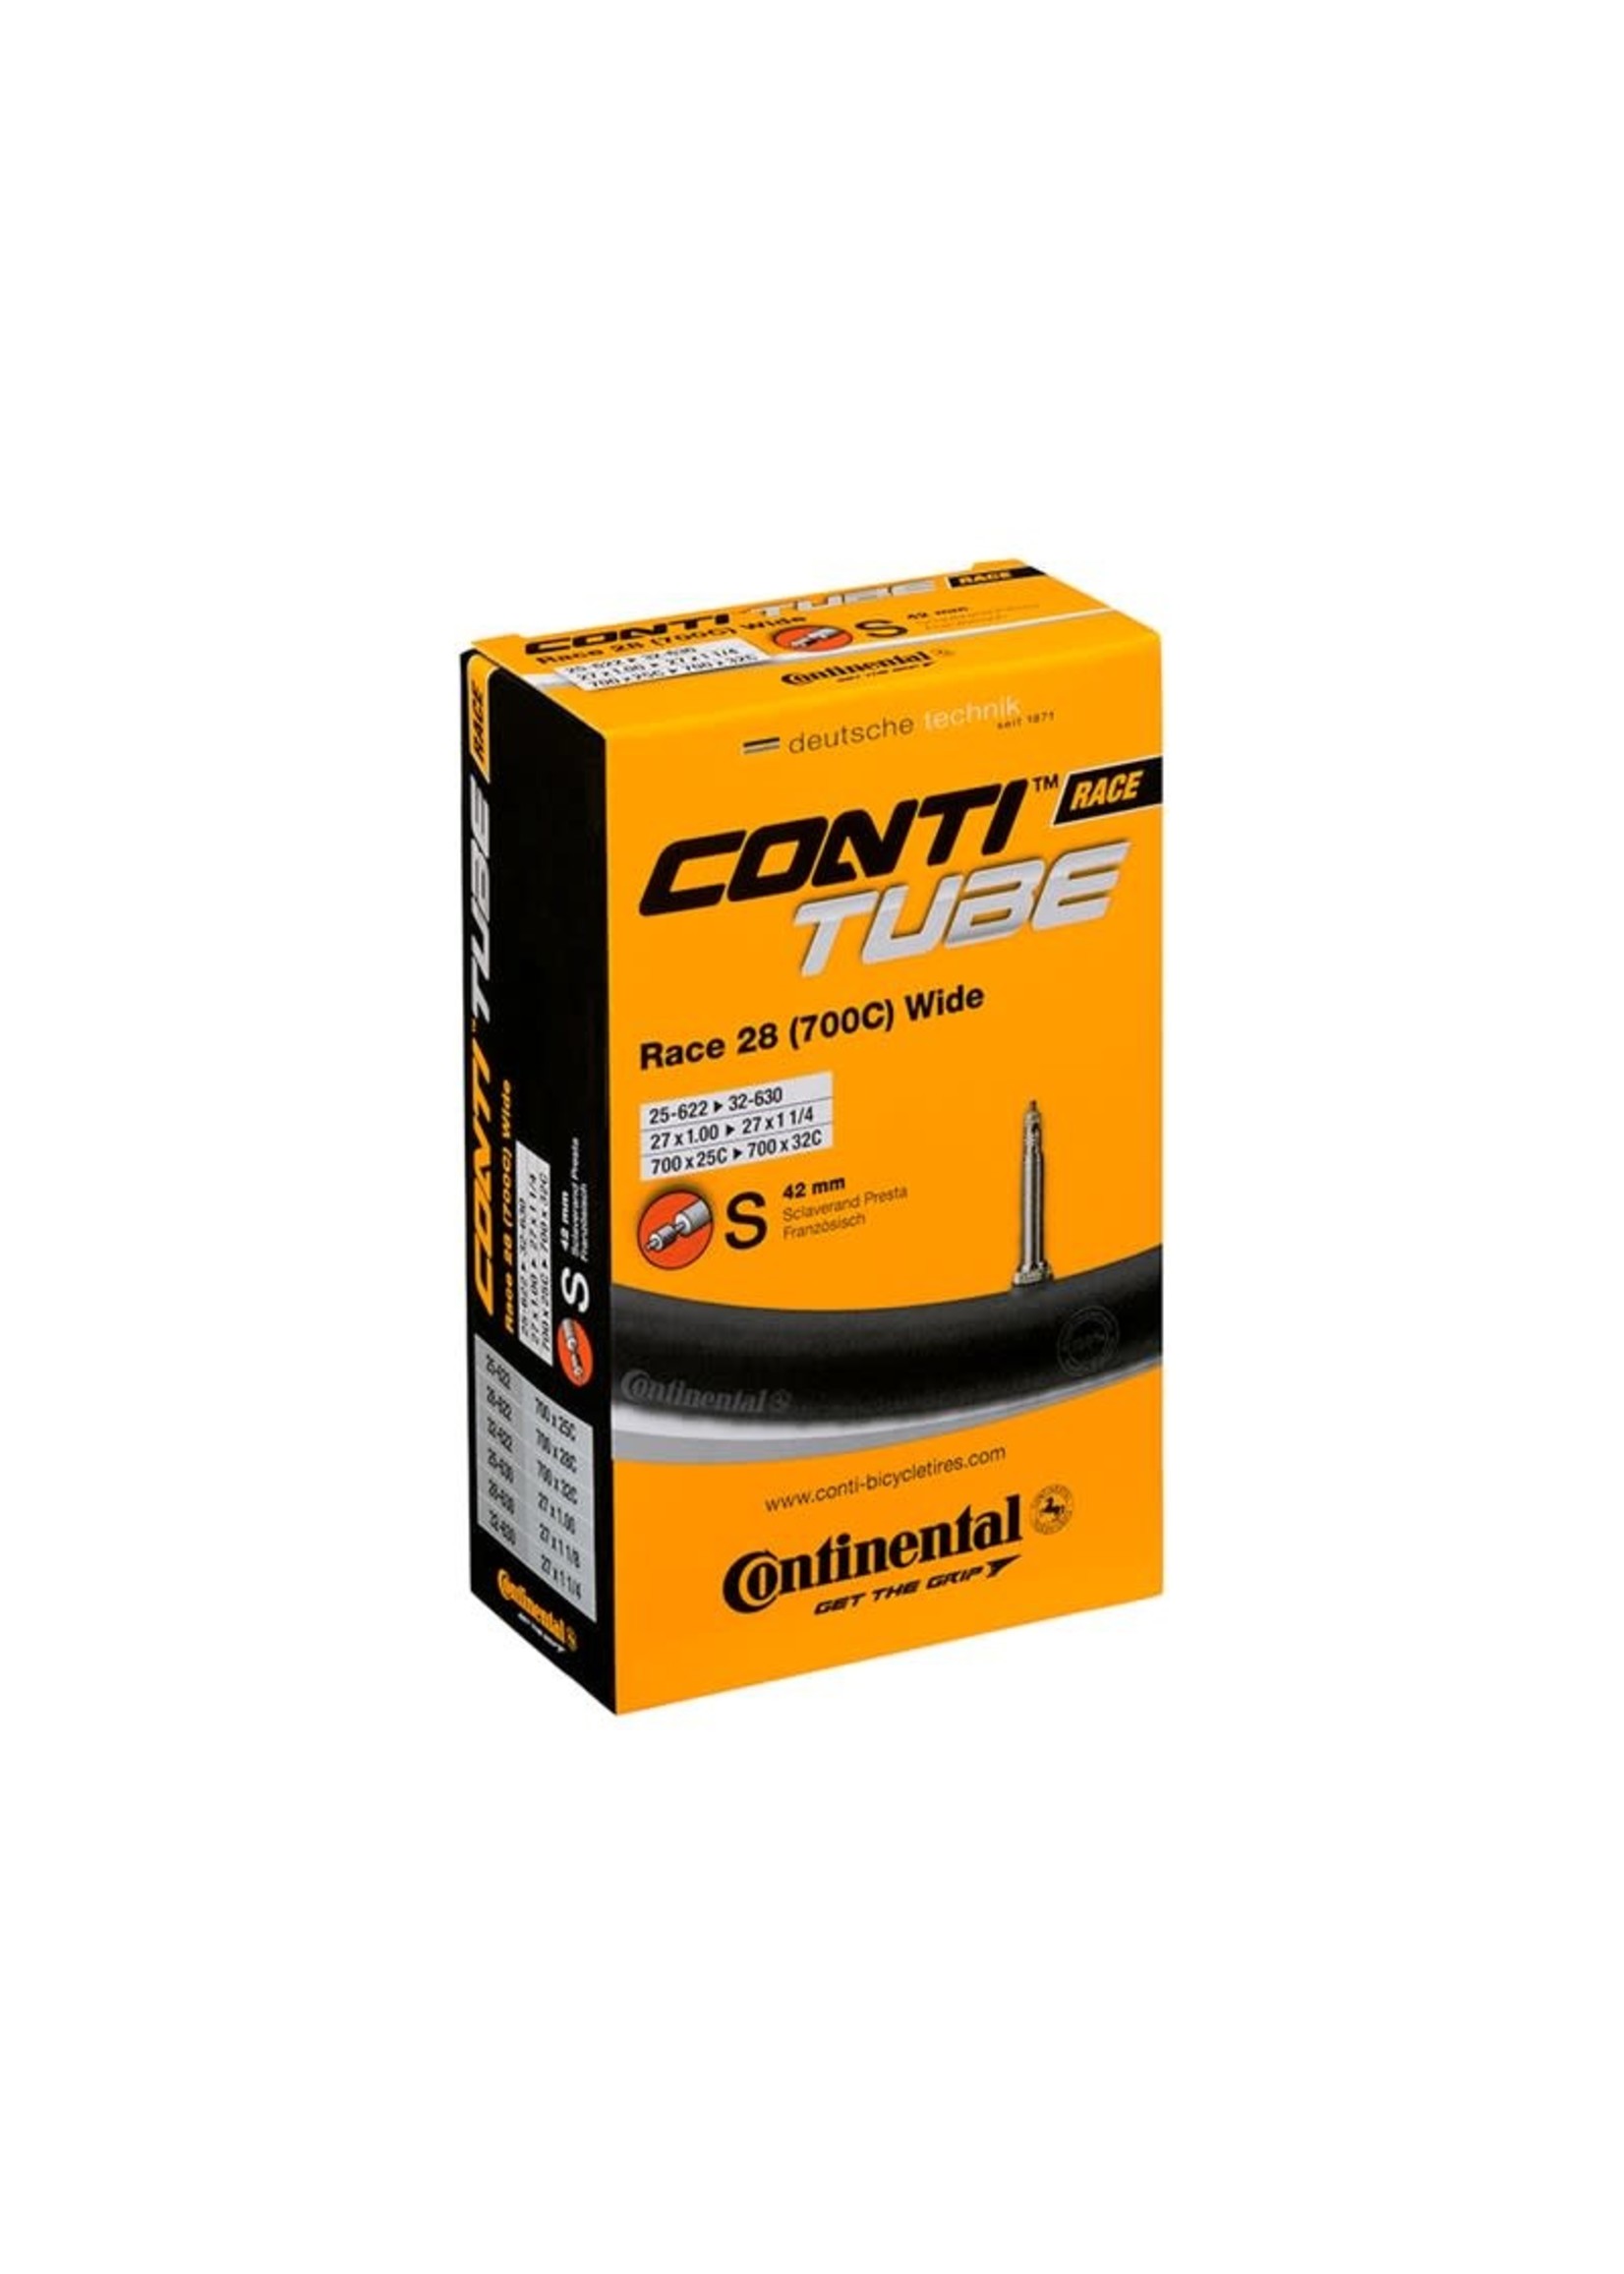 Continental CONTINENTAL - Chambre à air - Conti Tube - 700x25-32 - Presta 42mm